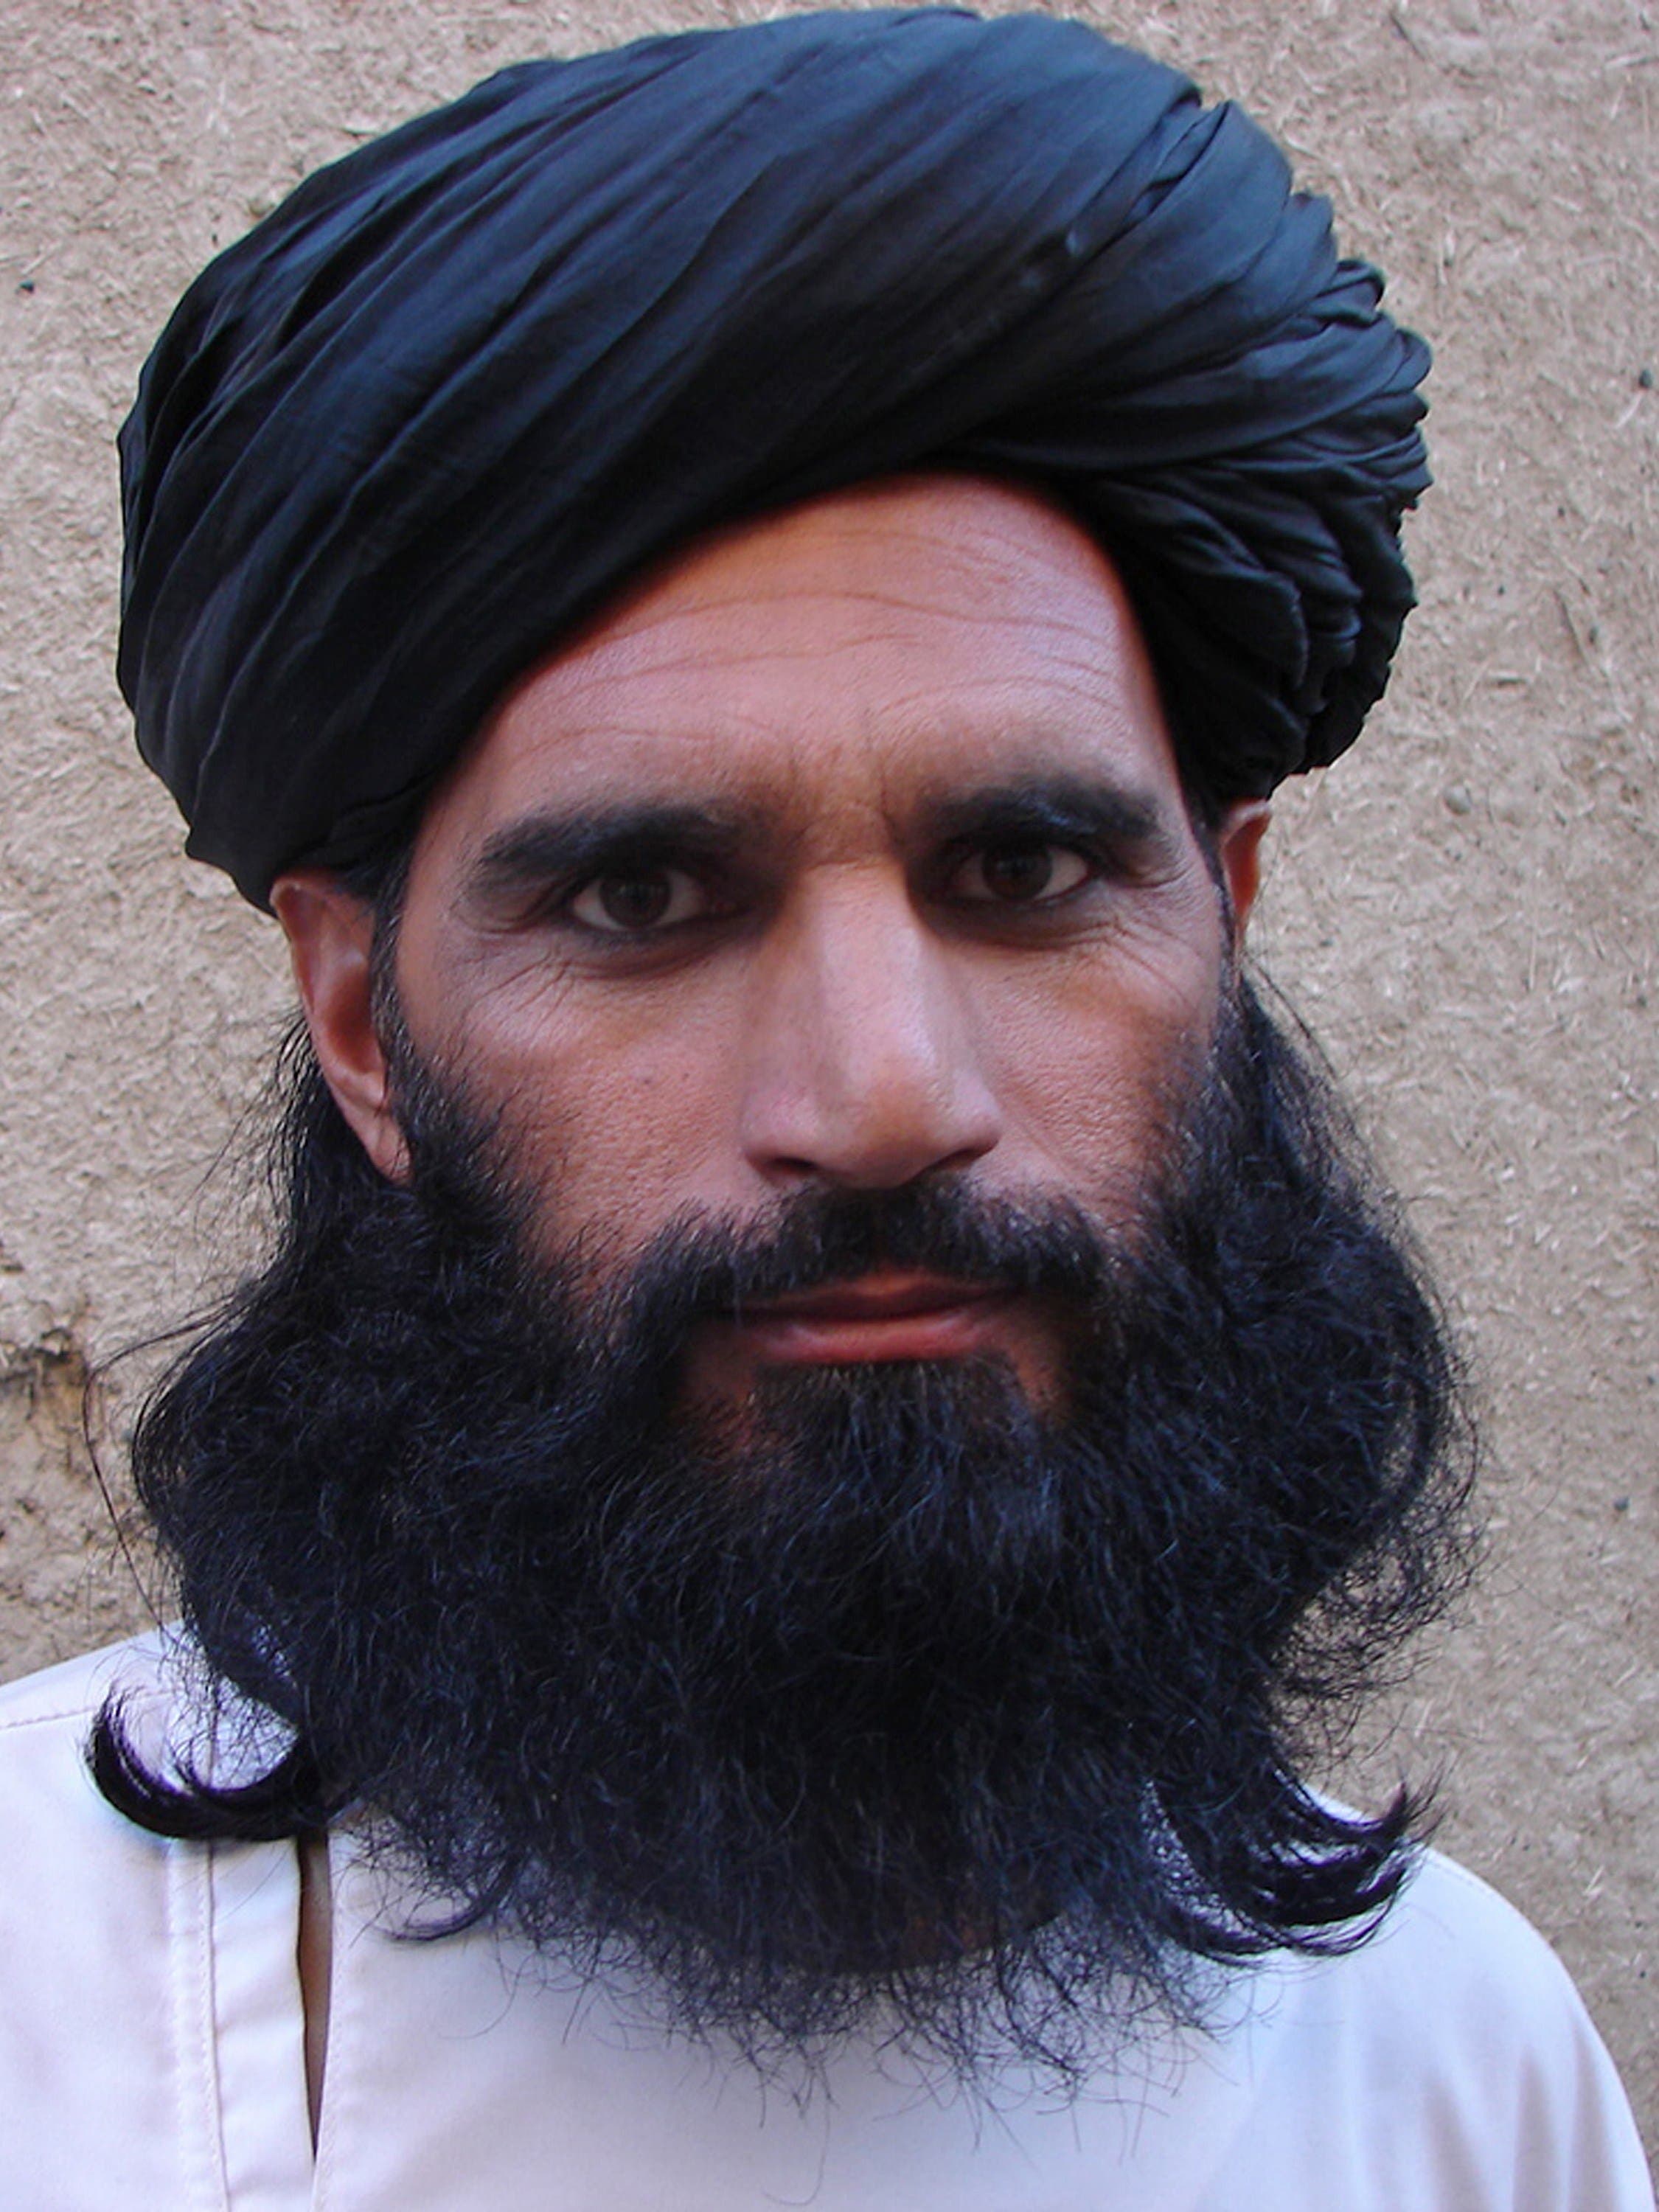 taliban ambushed